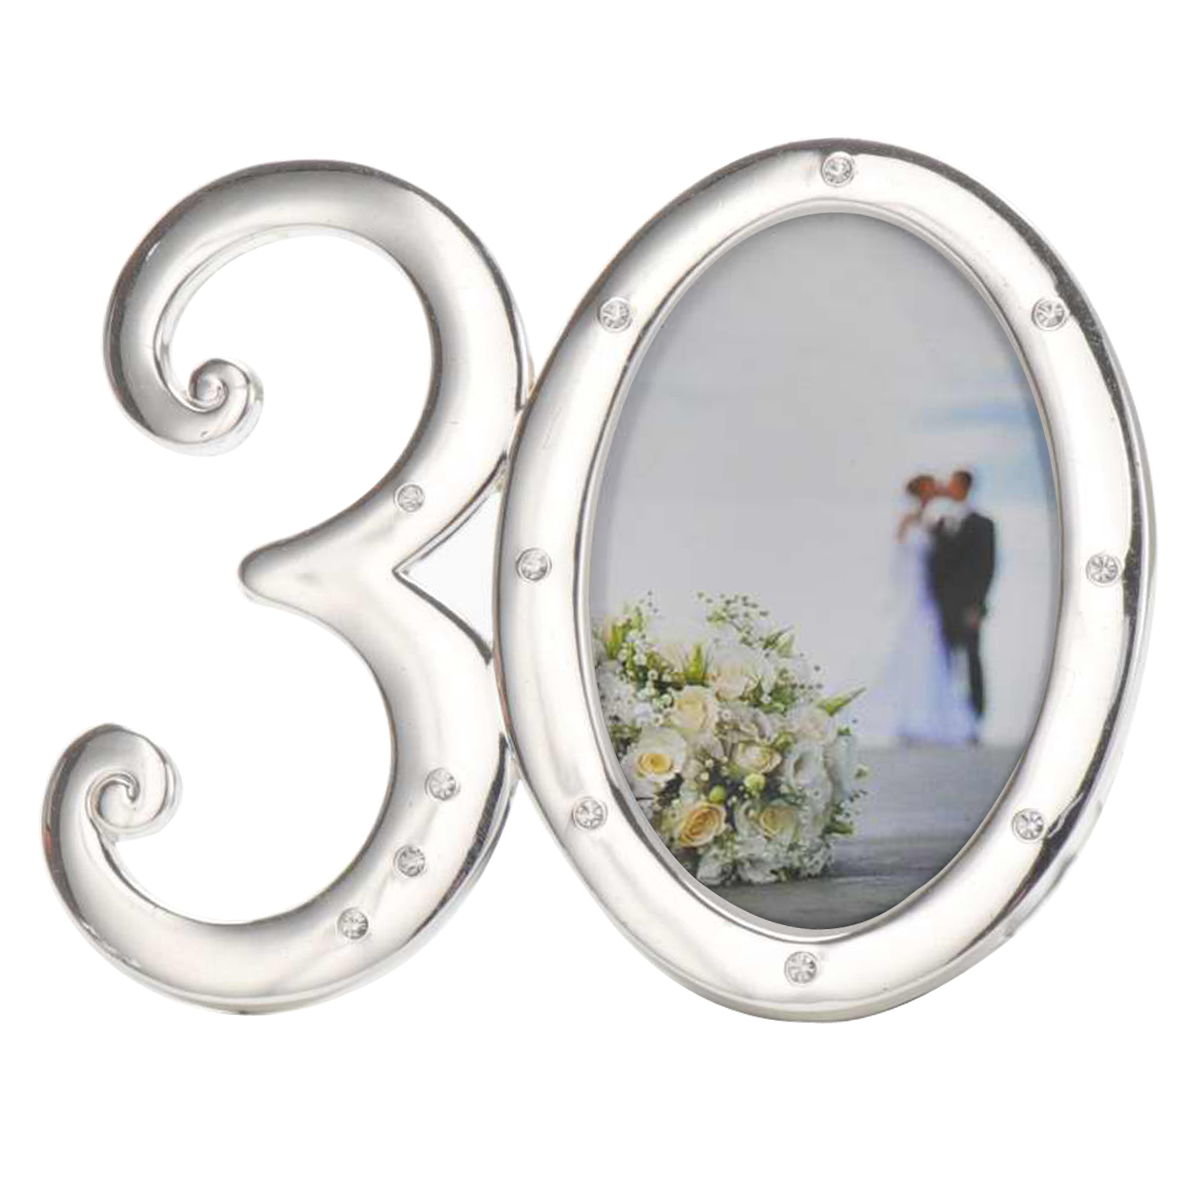 "30" memory photo frame